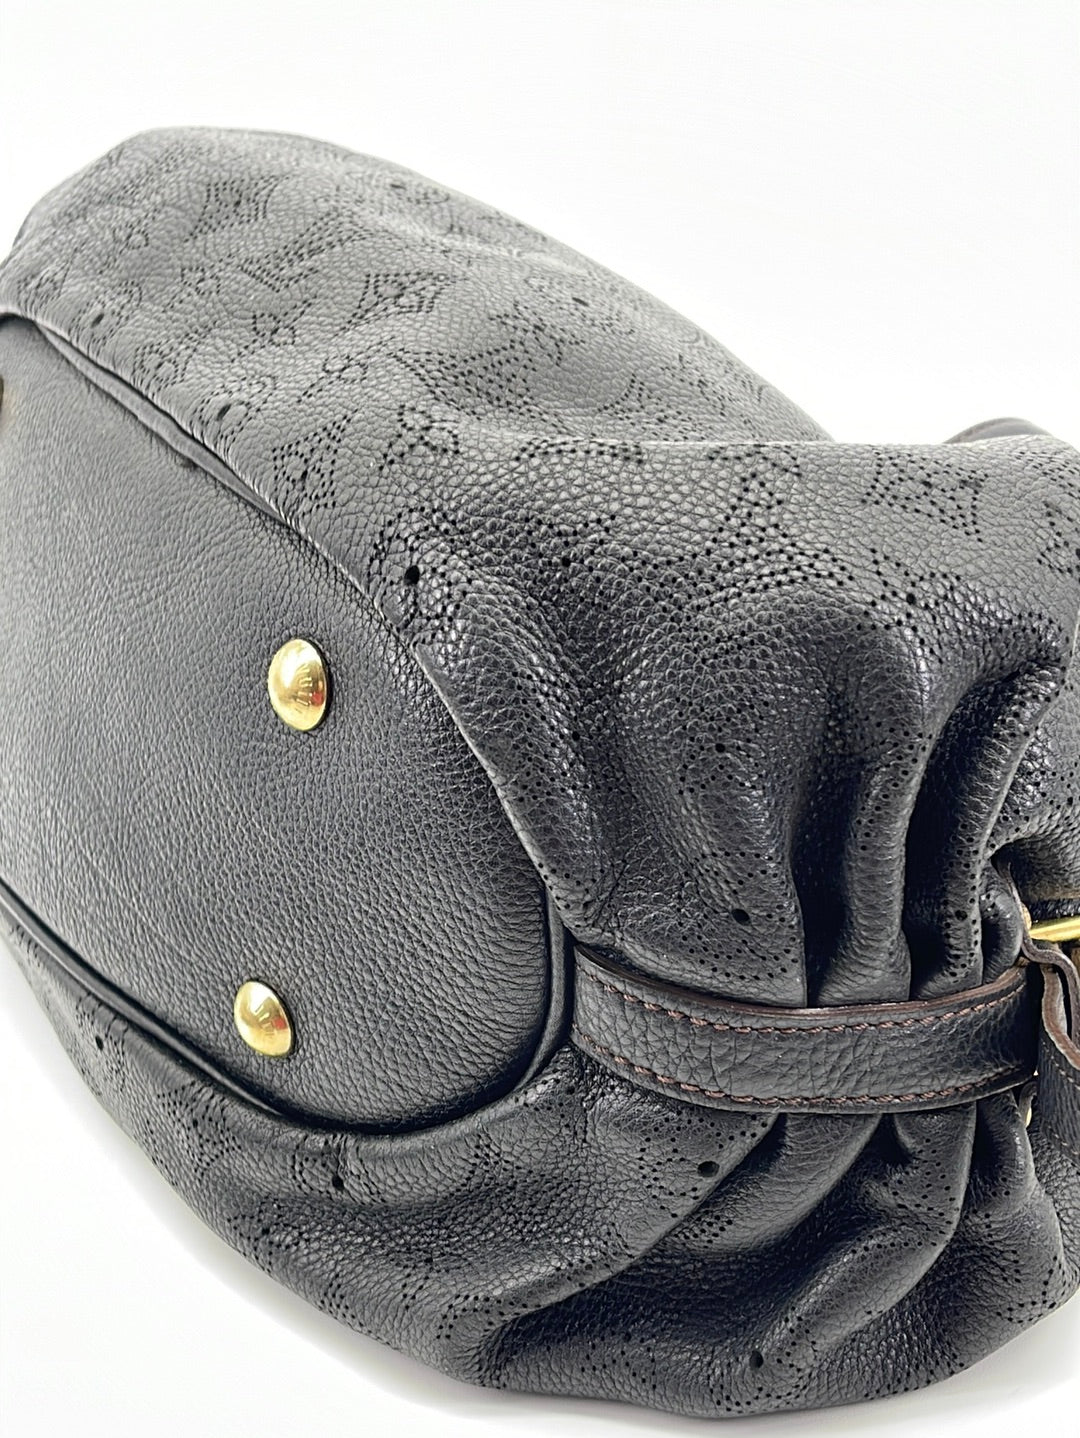 Louis Vuitton’s handbag, Mahina XL Hobo (Black Monogram Leather)